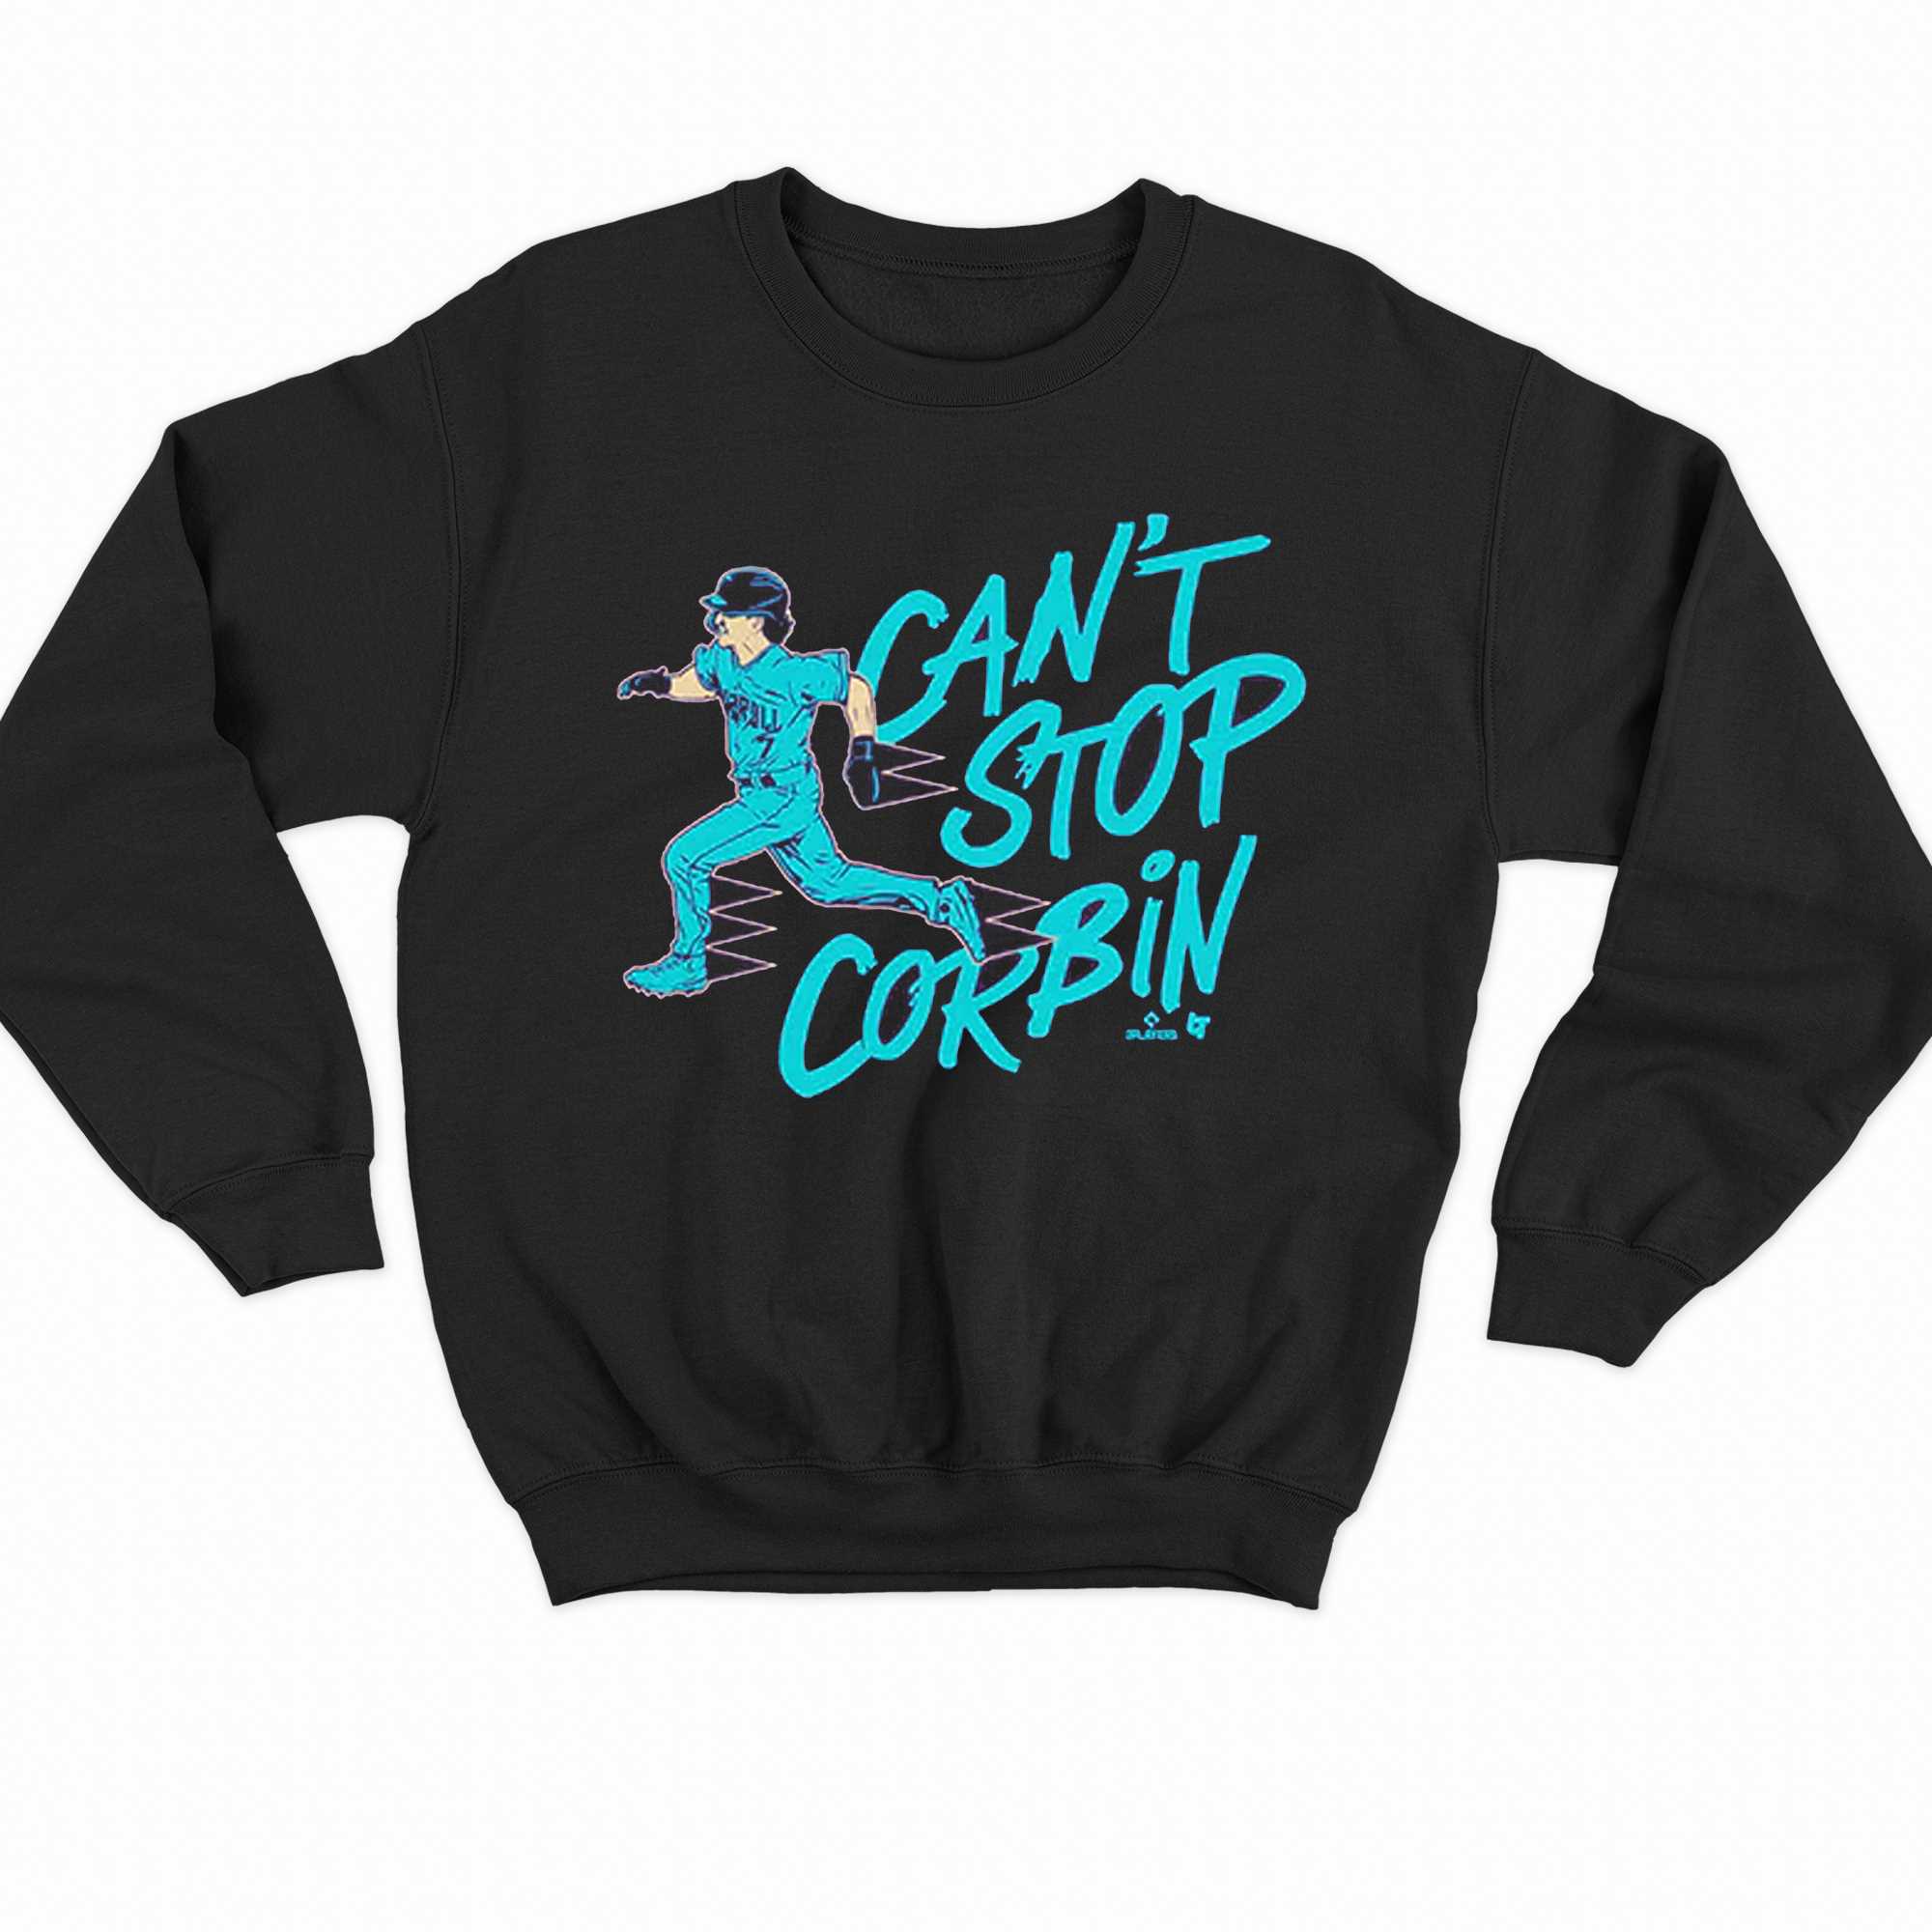 Can't Stop Corbin Carroll Shirt - Shibtee Clothing